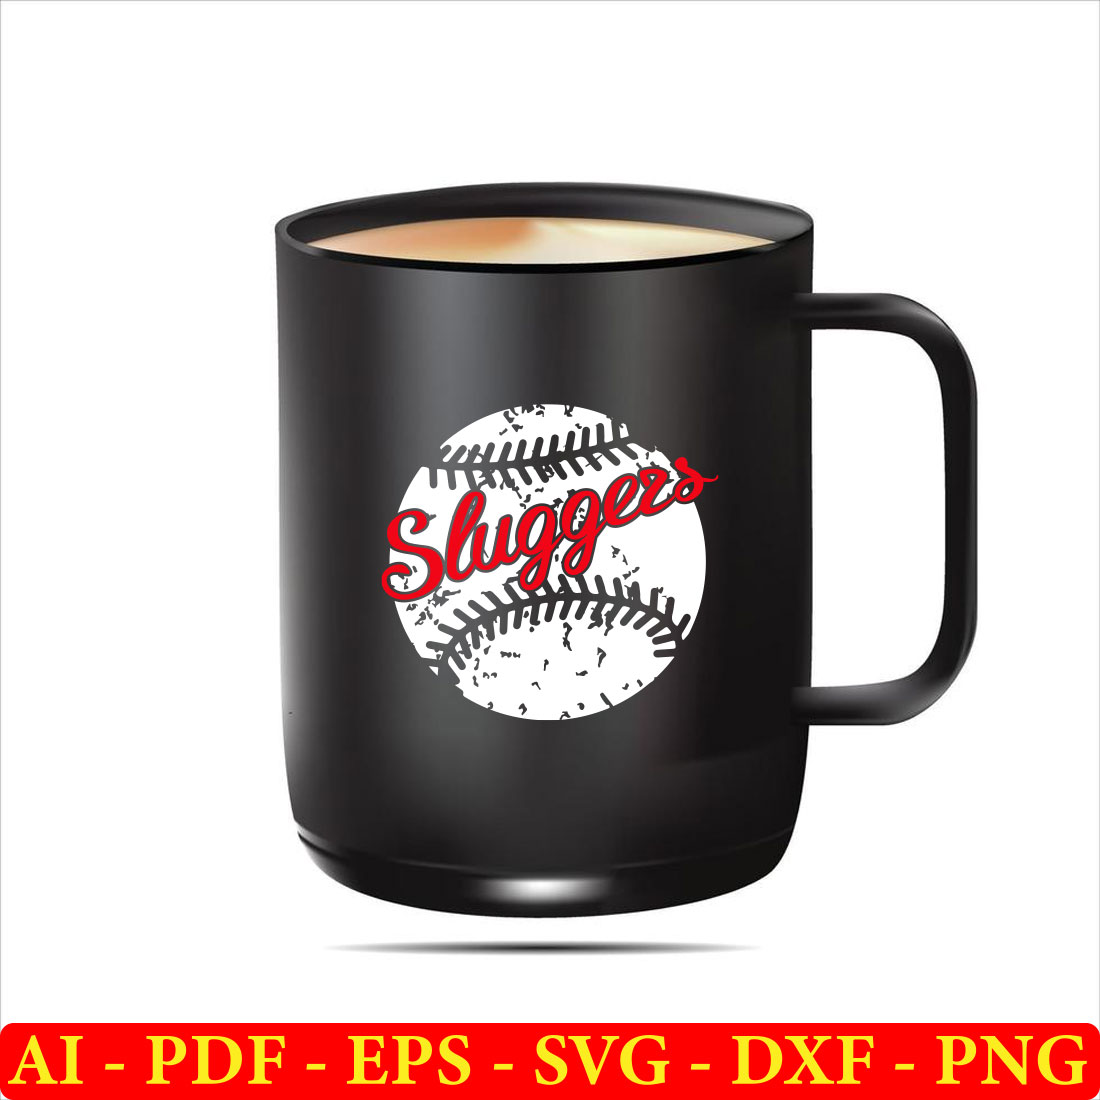 Black coffee mug with a baseball on it.